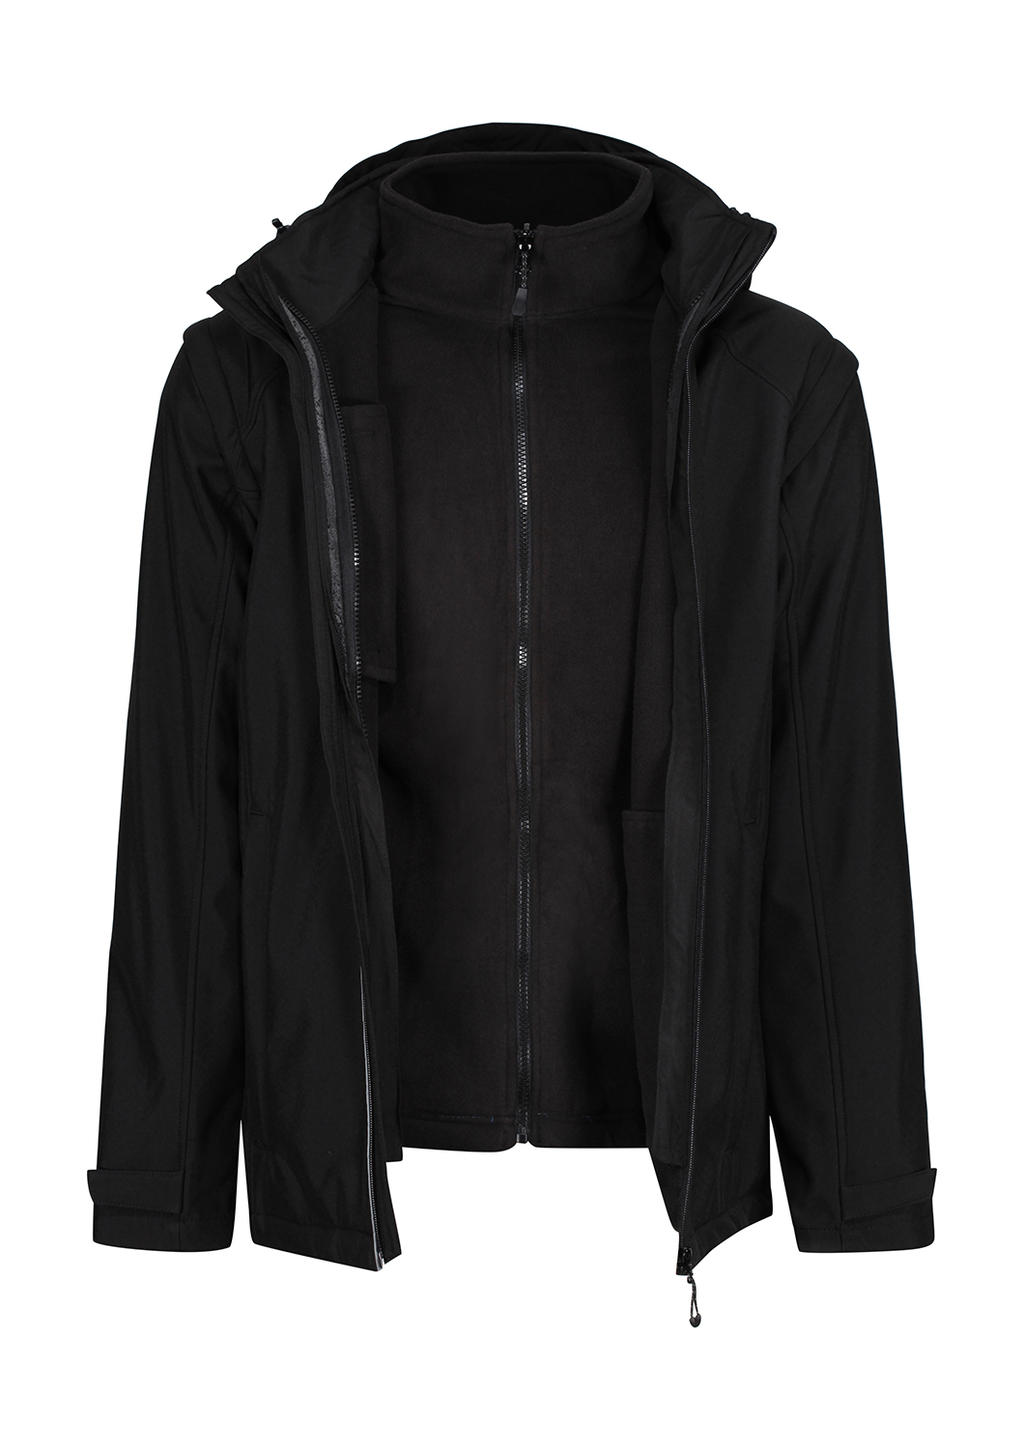  Erasmus 4-in-1 Softshell Jacket in Farbe Black/Black